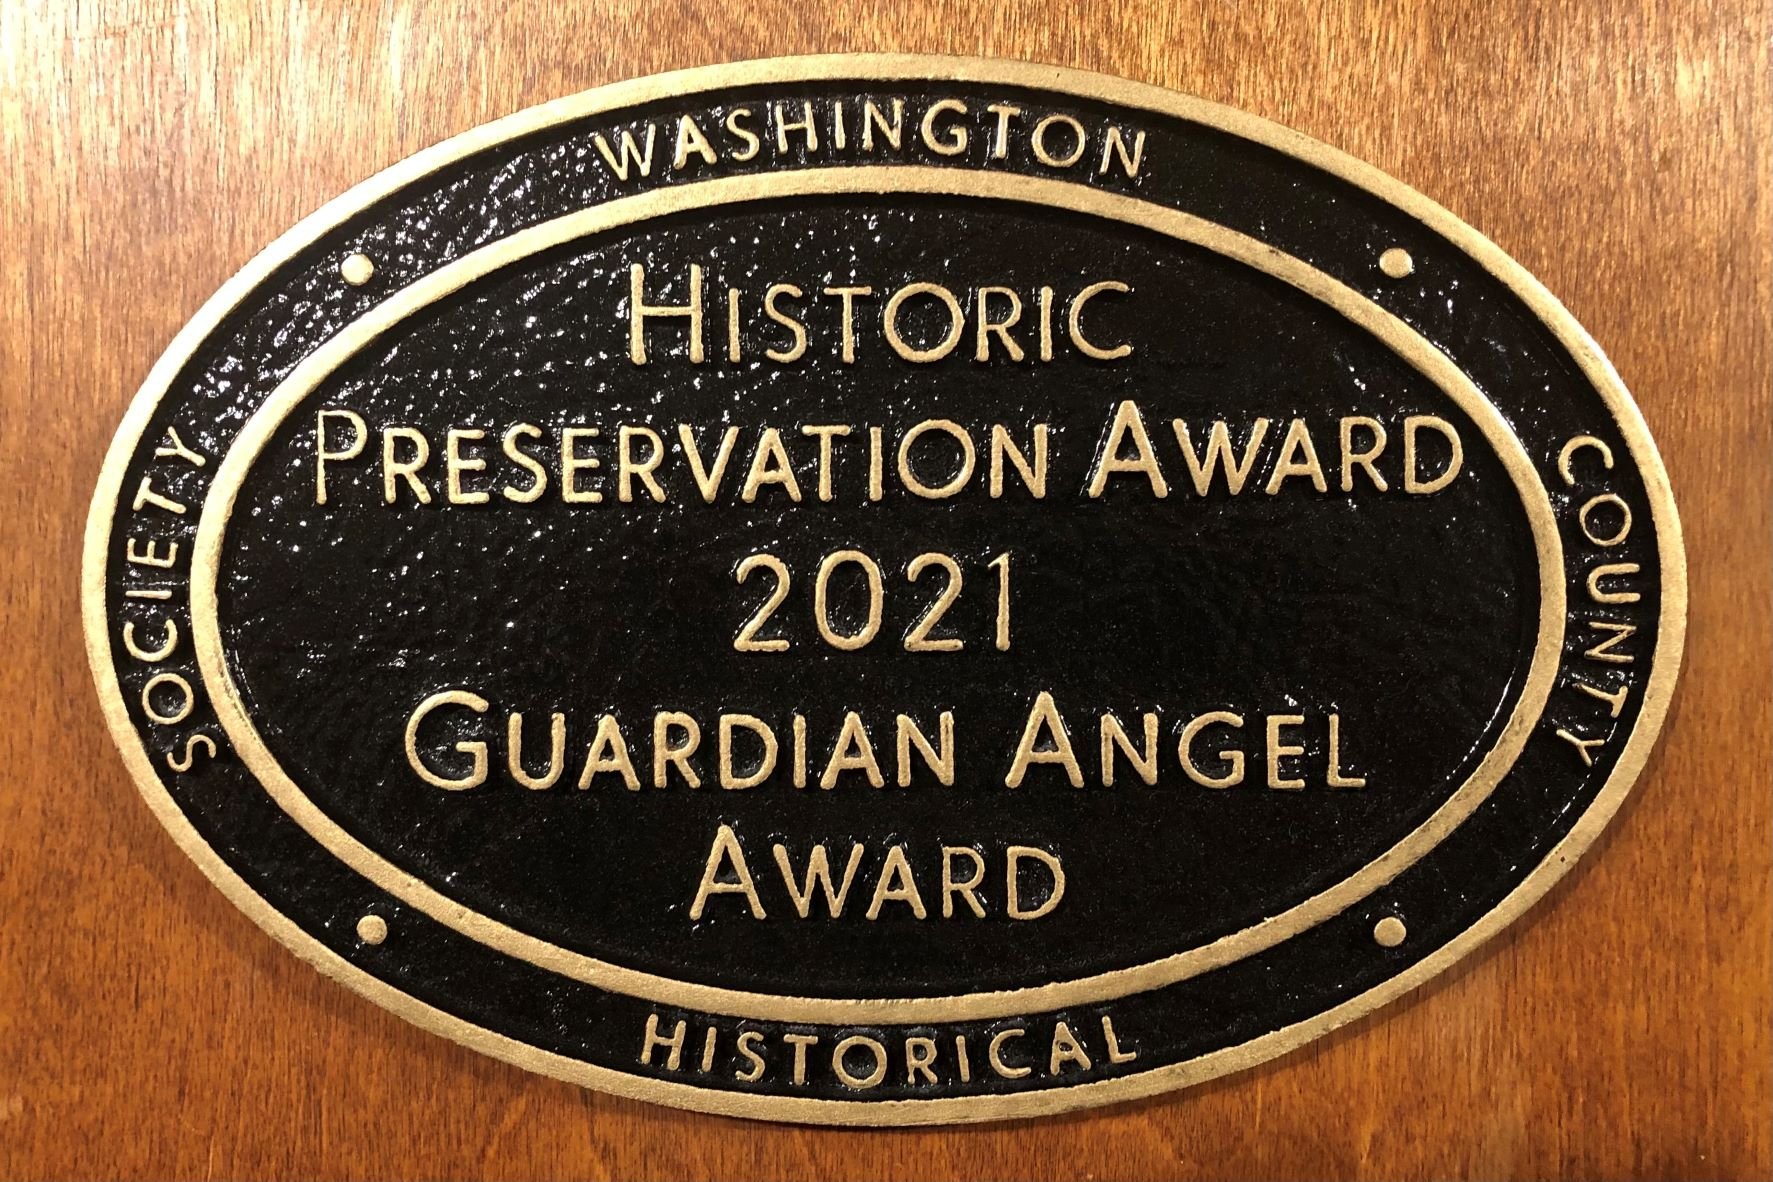 Image of 2021 historic preservation award plaque